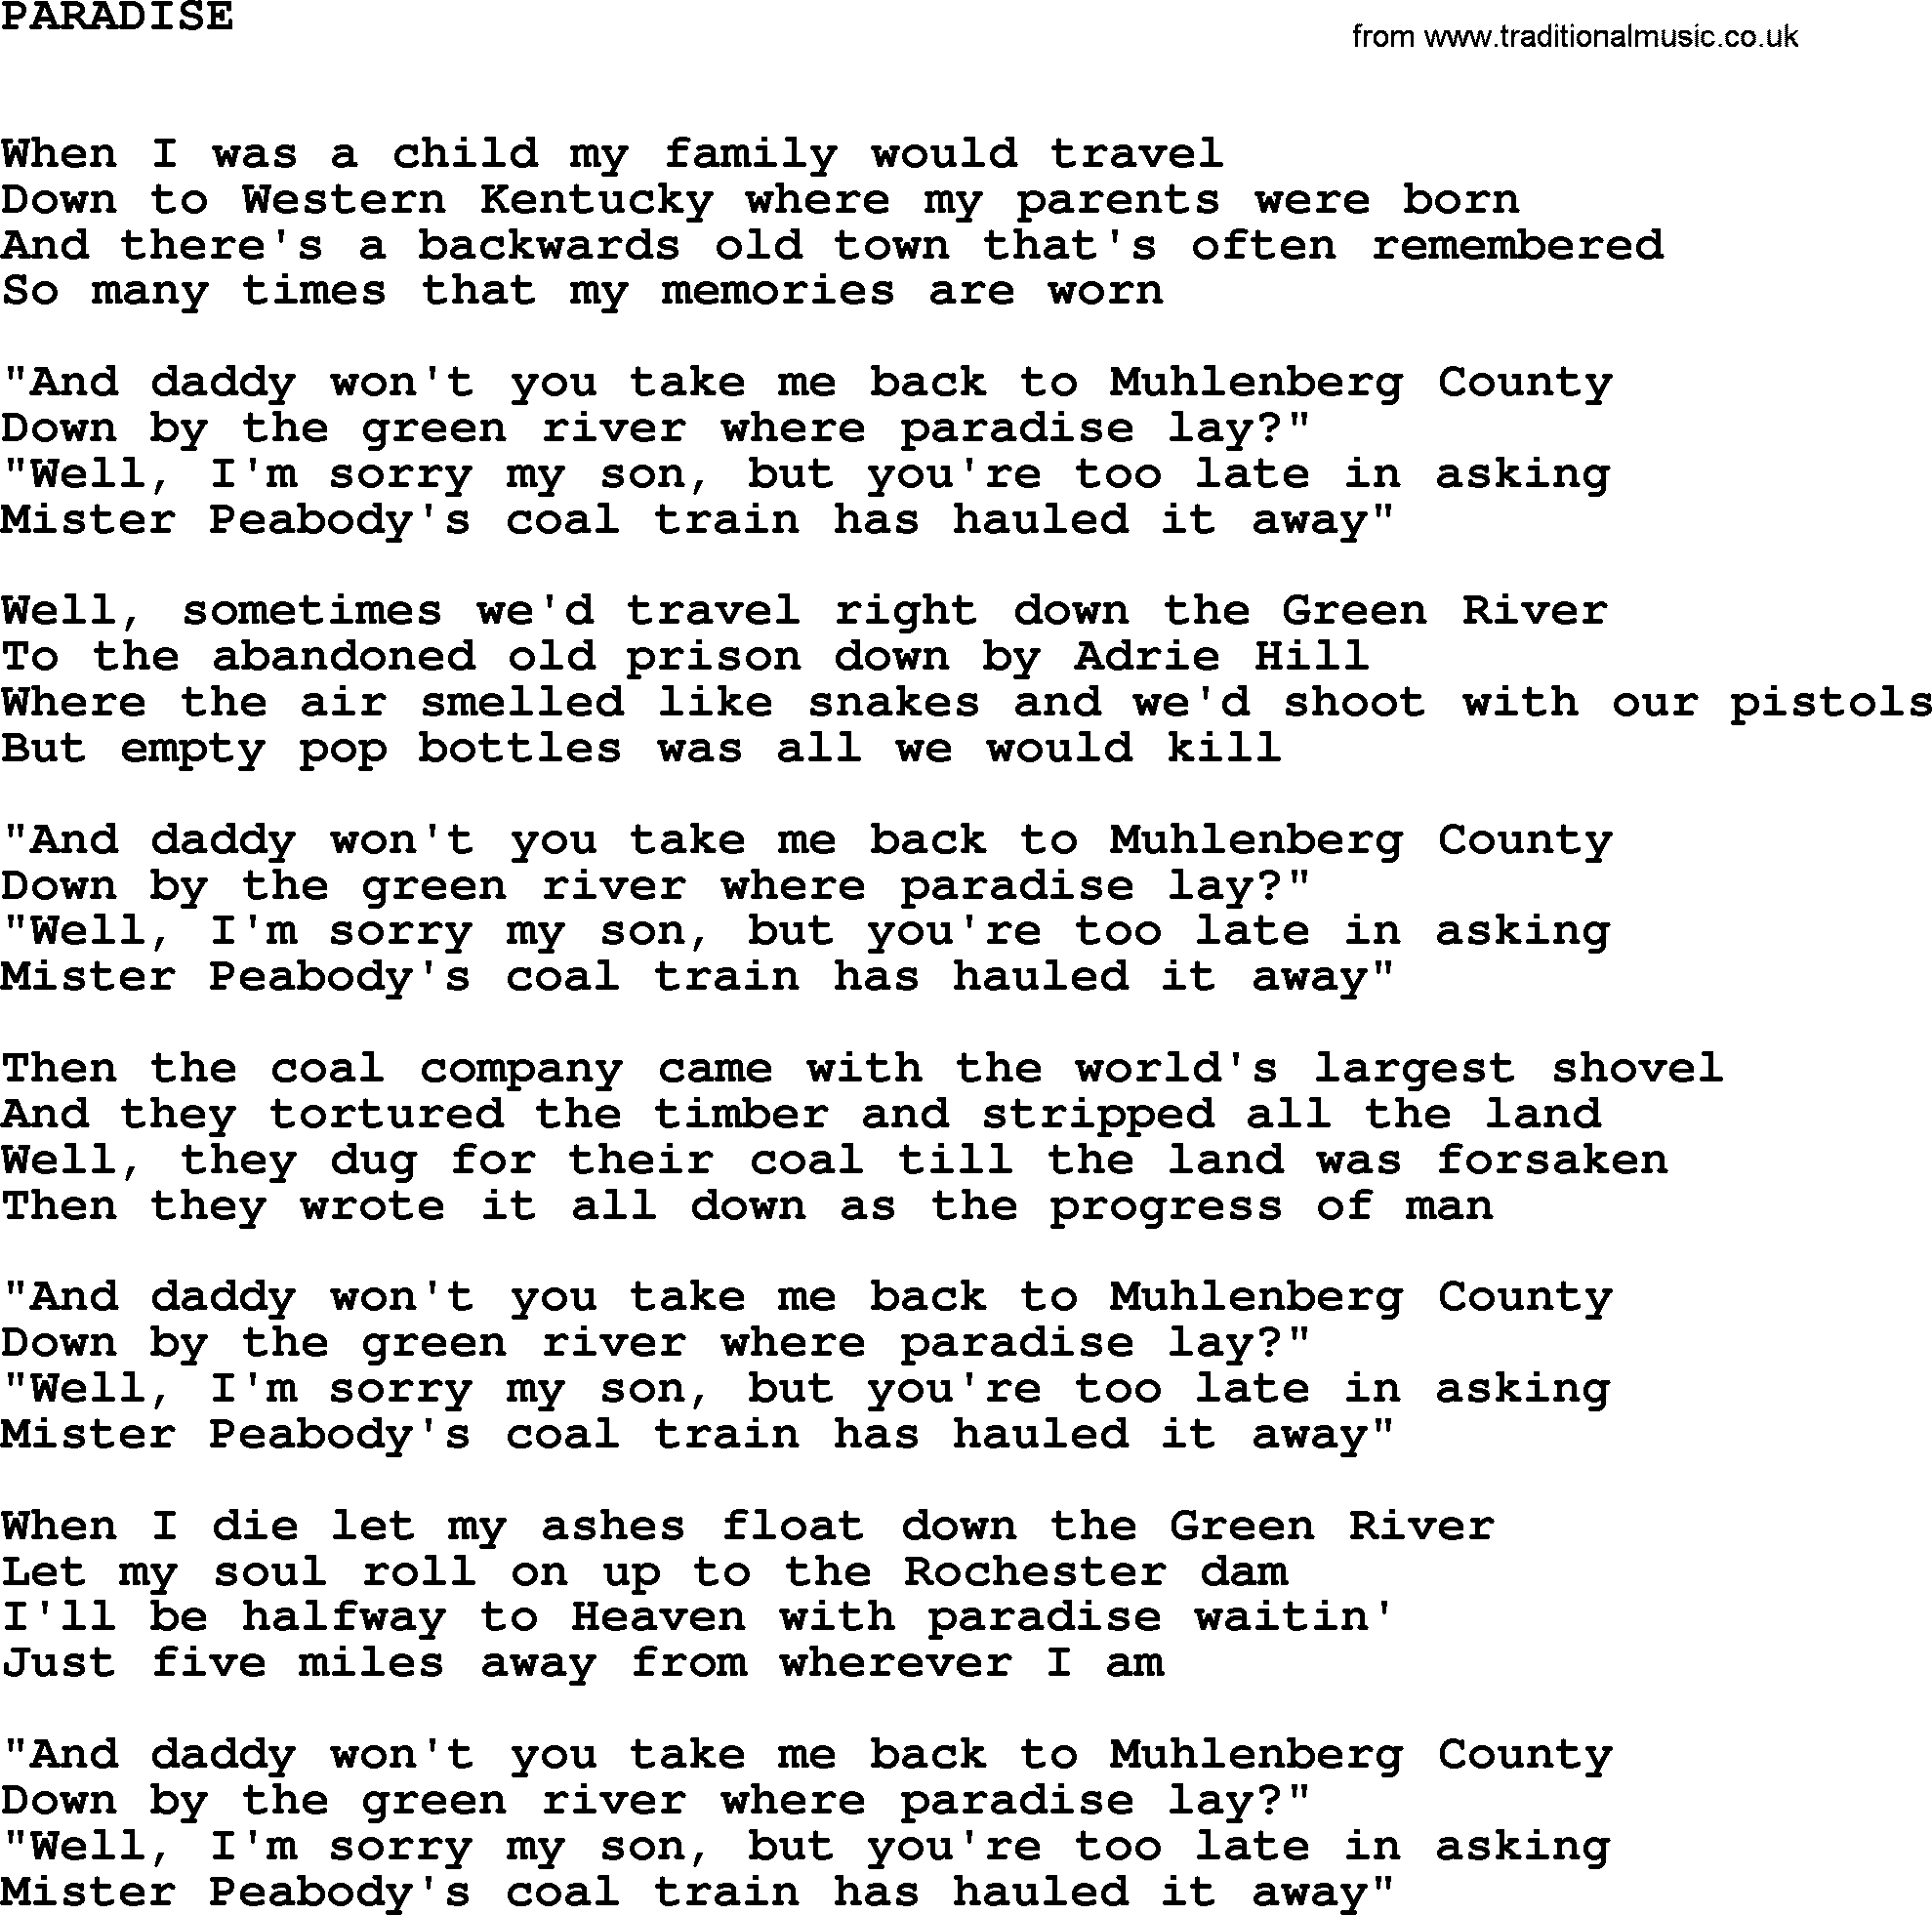 Johnny Cash song Paradise.txt lyrics